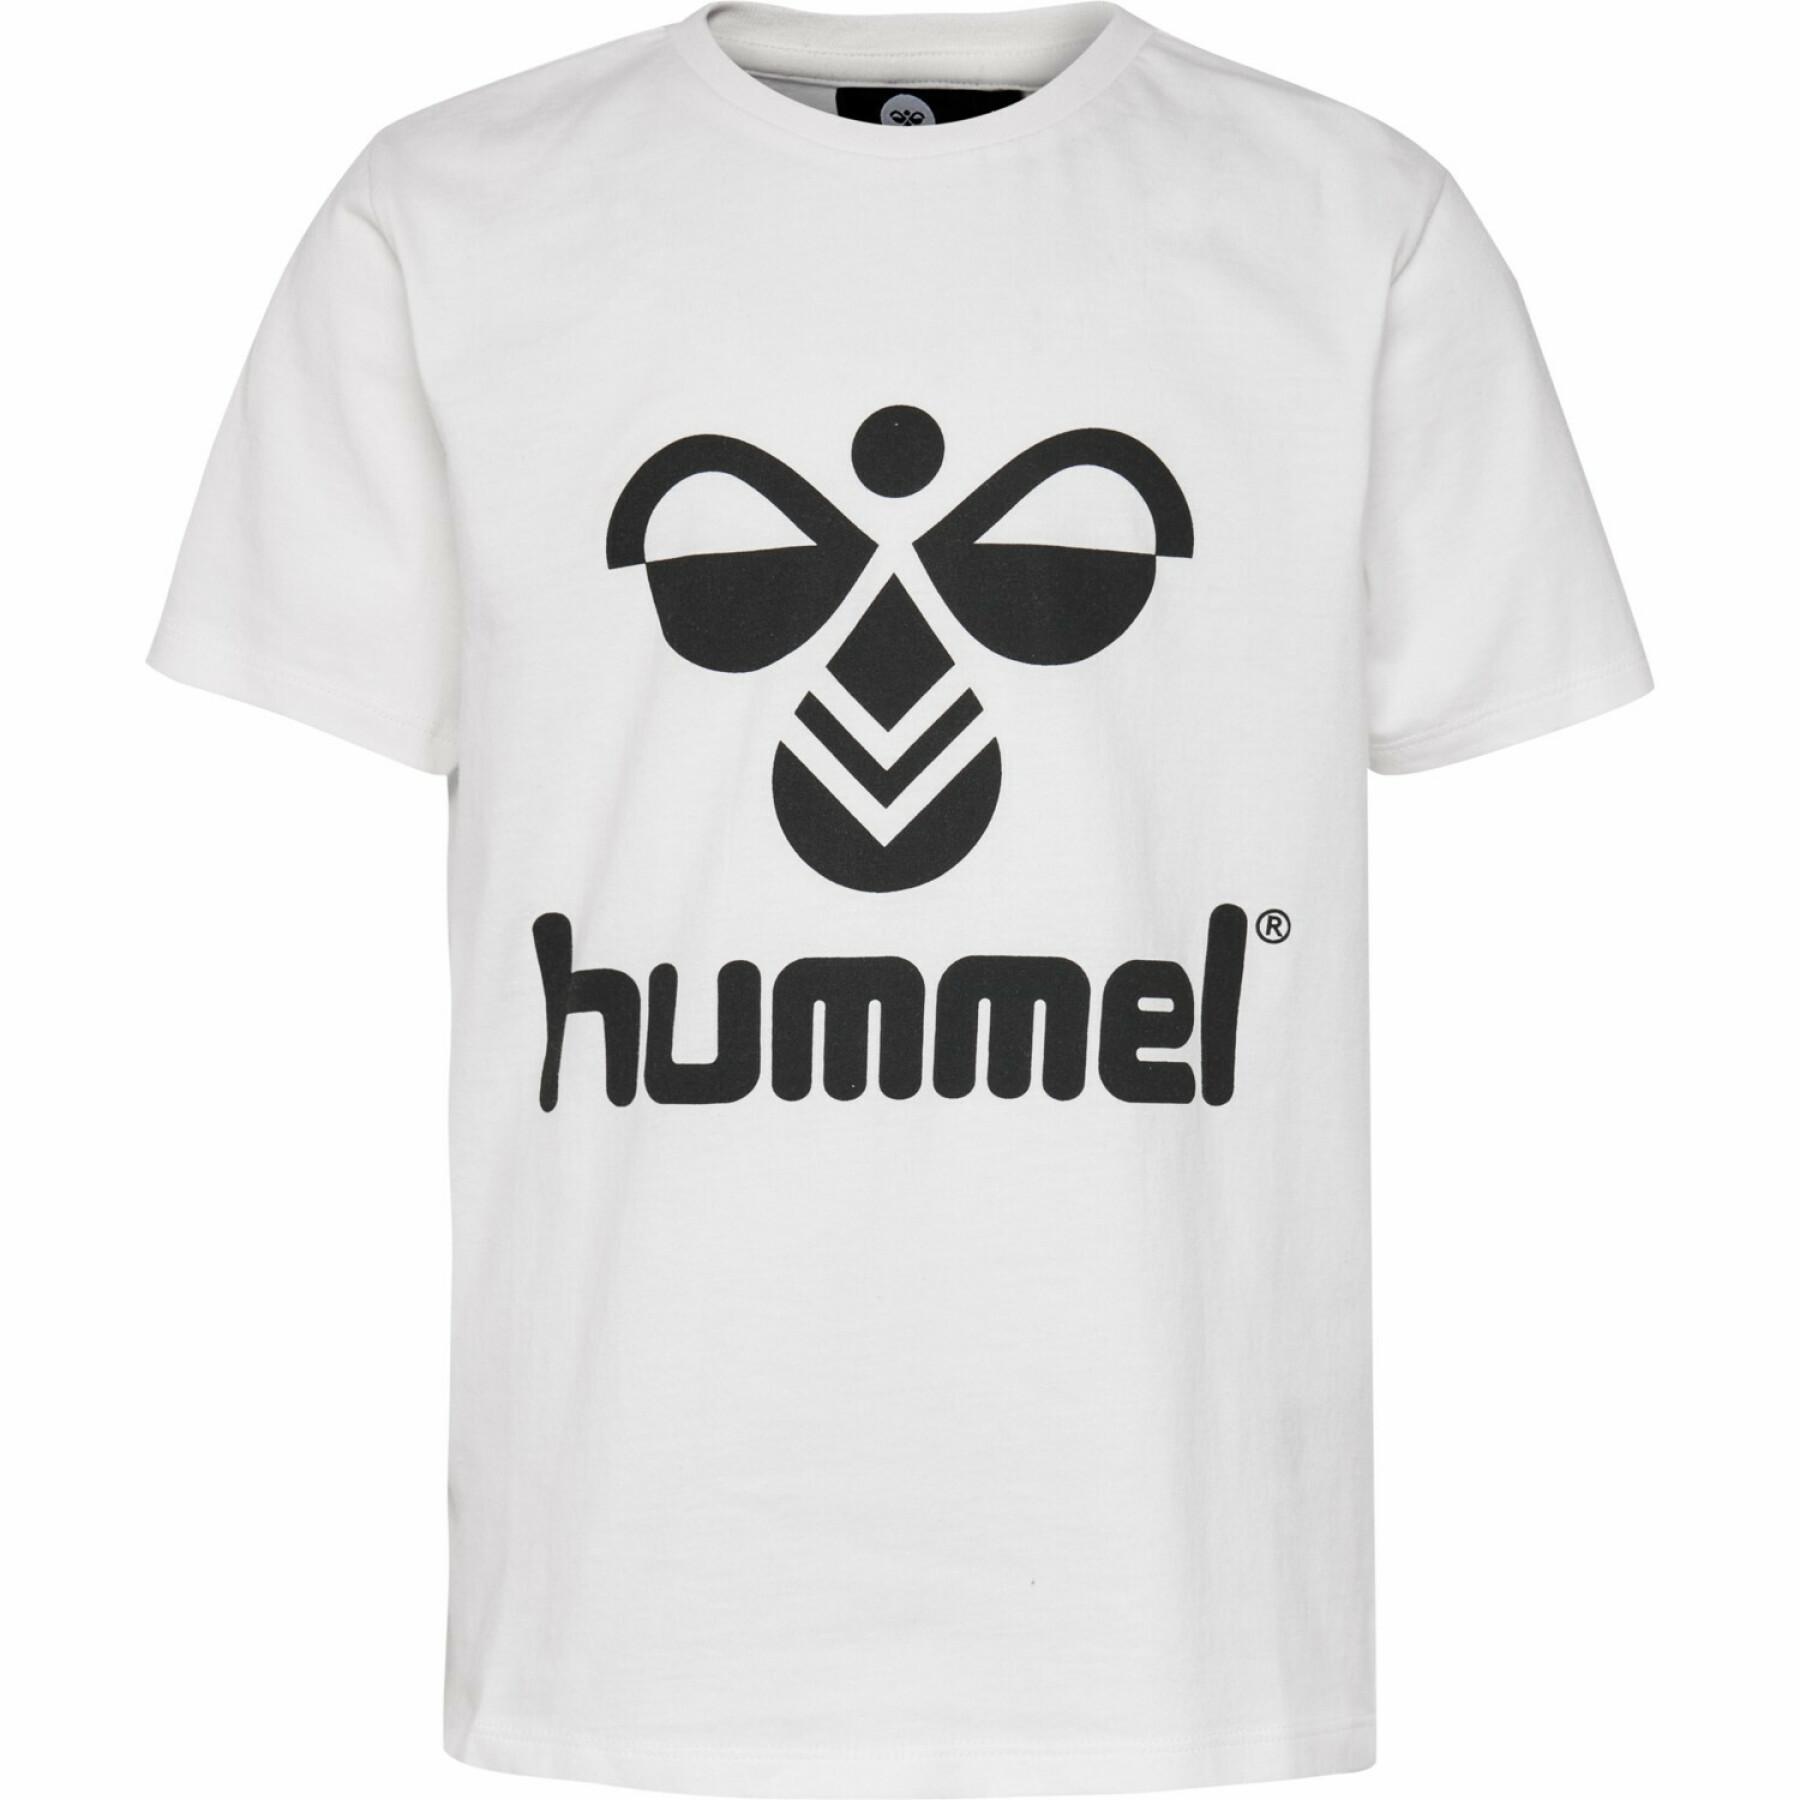 Volleyball shirts T-shirts - Kid\'s - volleyball hmltres Women\'s polo wear et - T-shirt wear Hummel